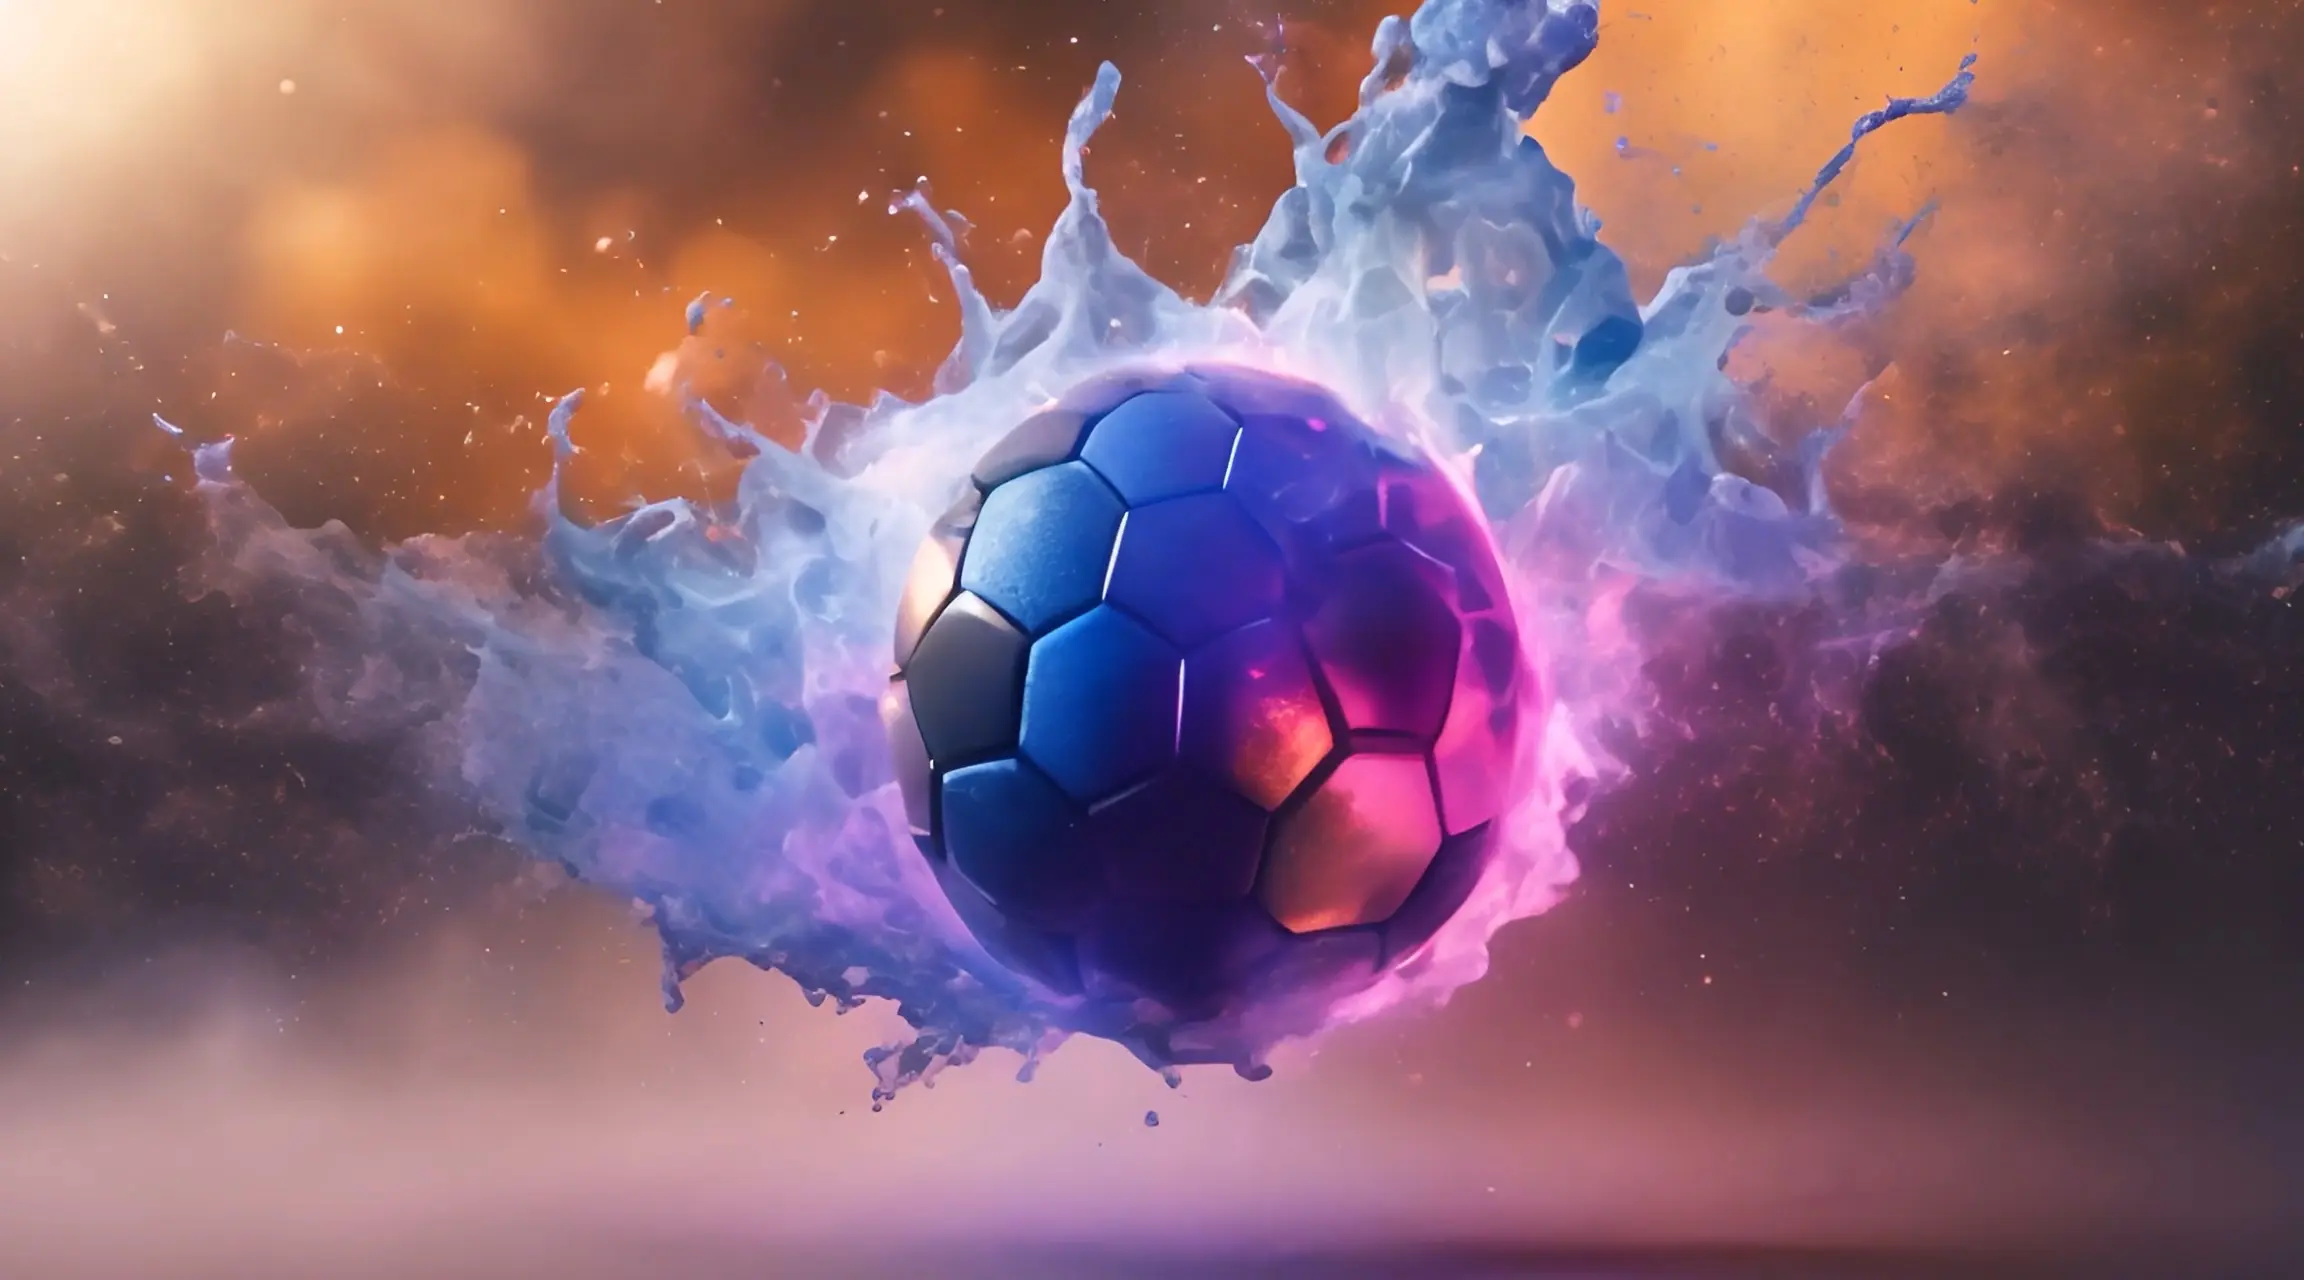 Aqua and Flame Soccer Ball Backdrop